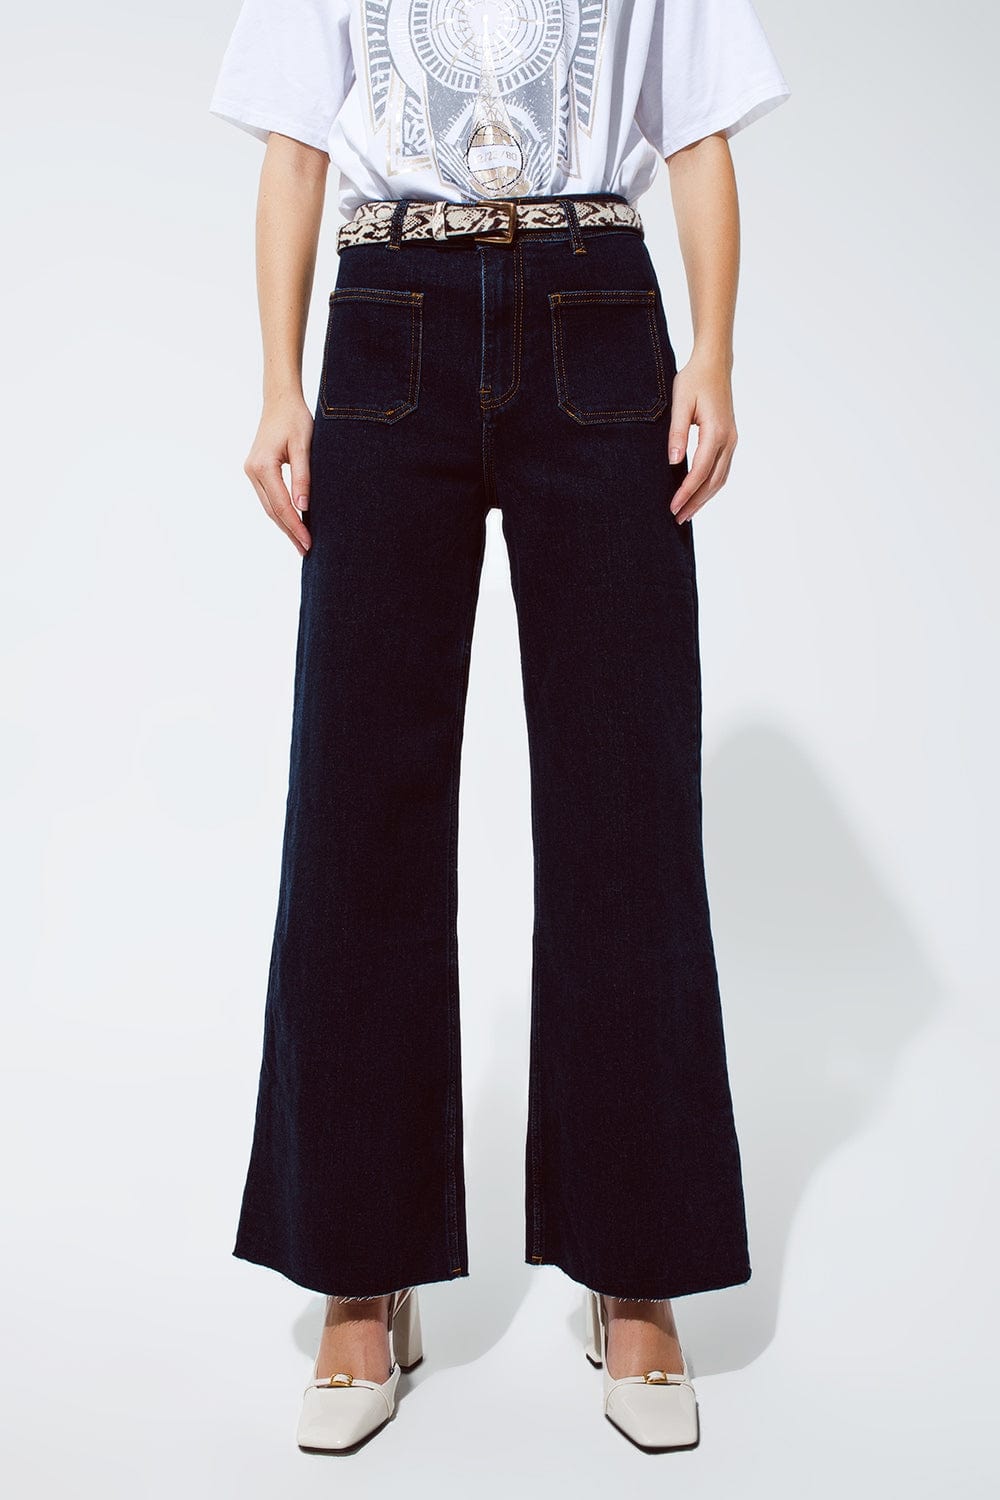 Q2 Women's Jean Straight Jeans With Pocket Detail In Dark Wash